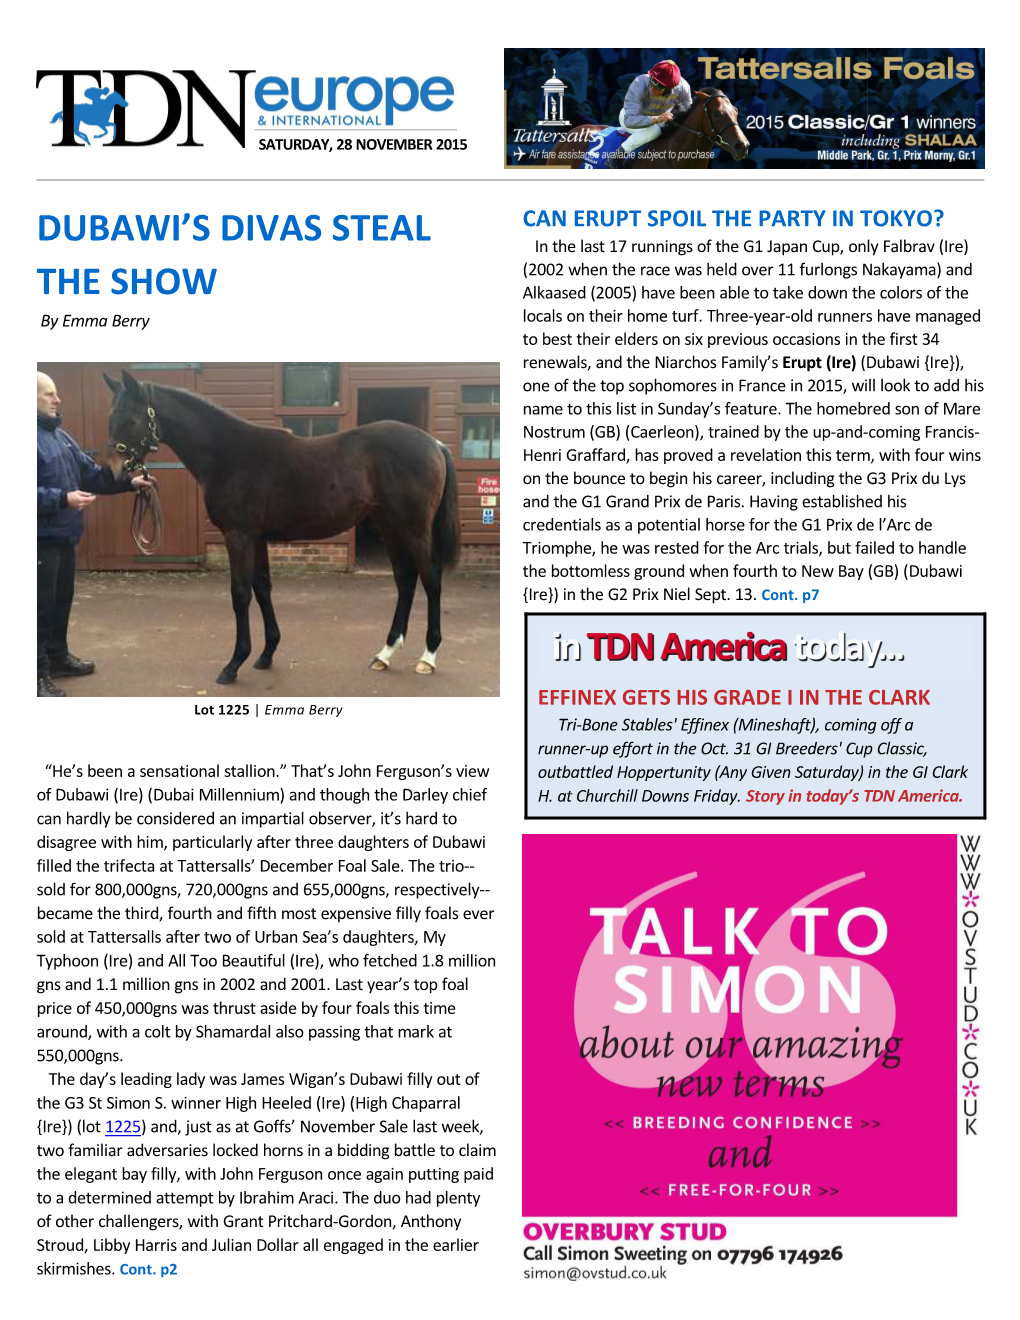 Dubawi's Divas Steal the Show